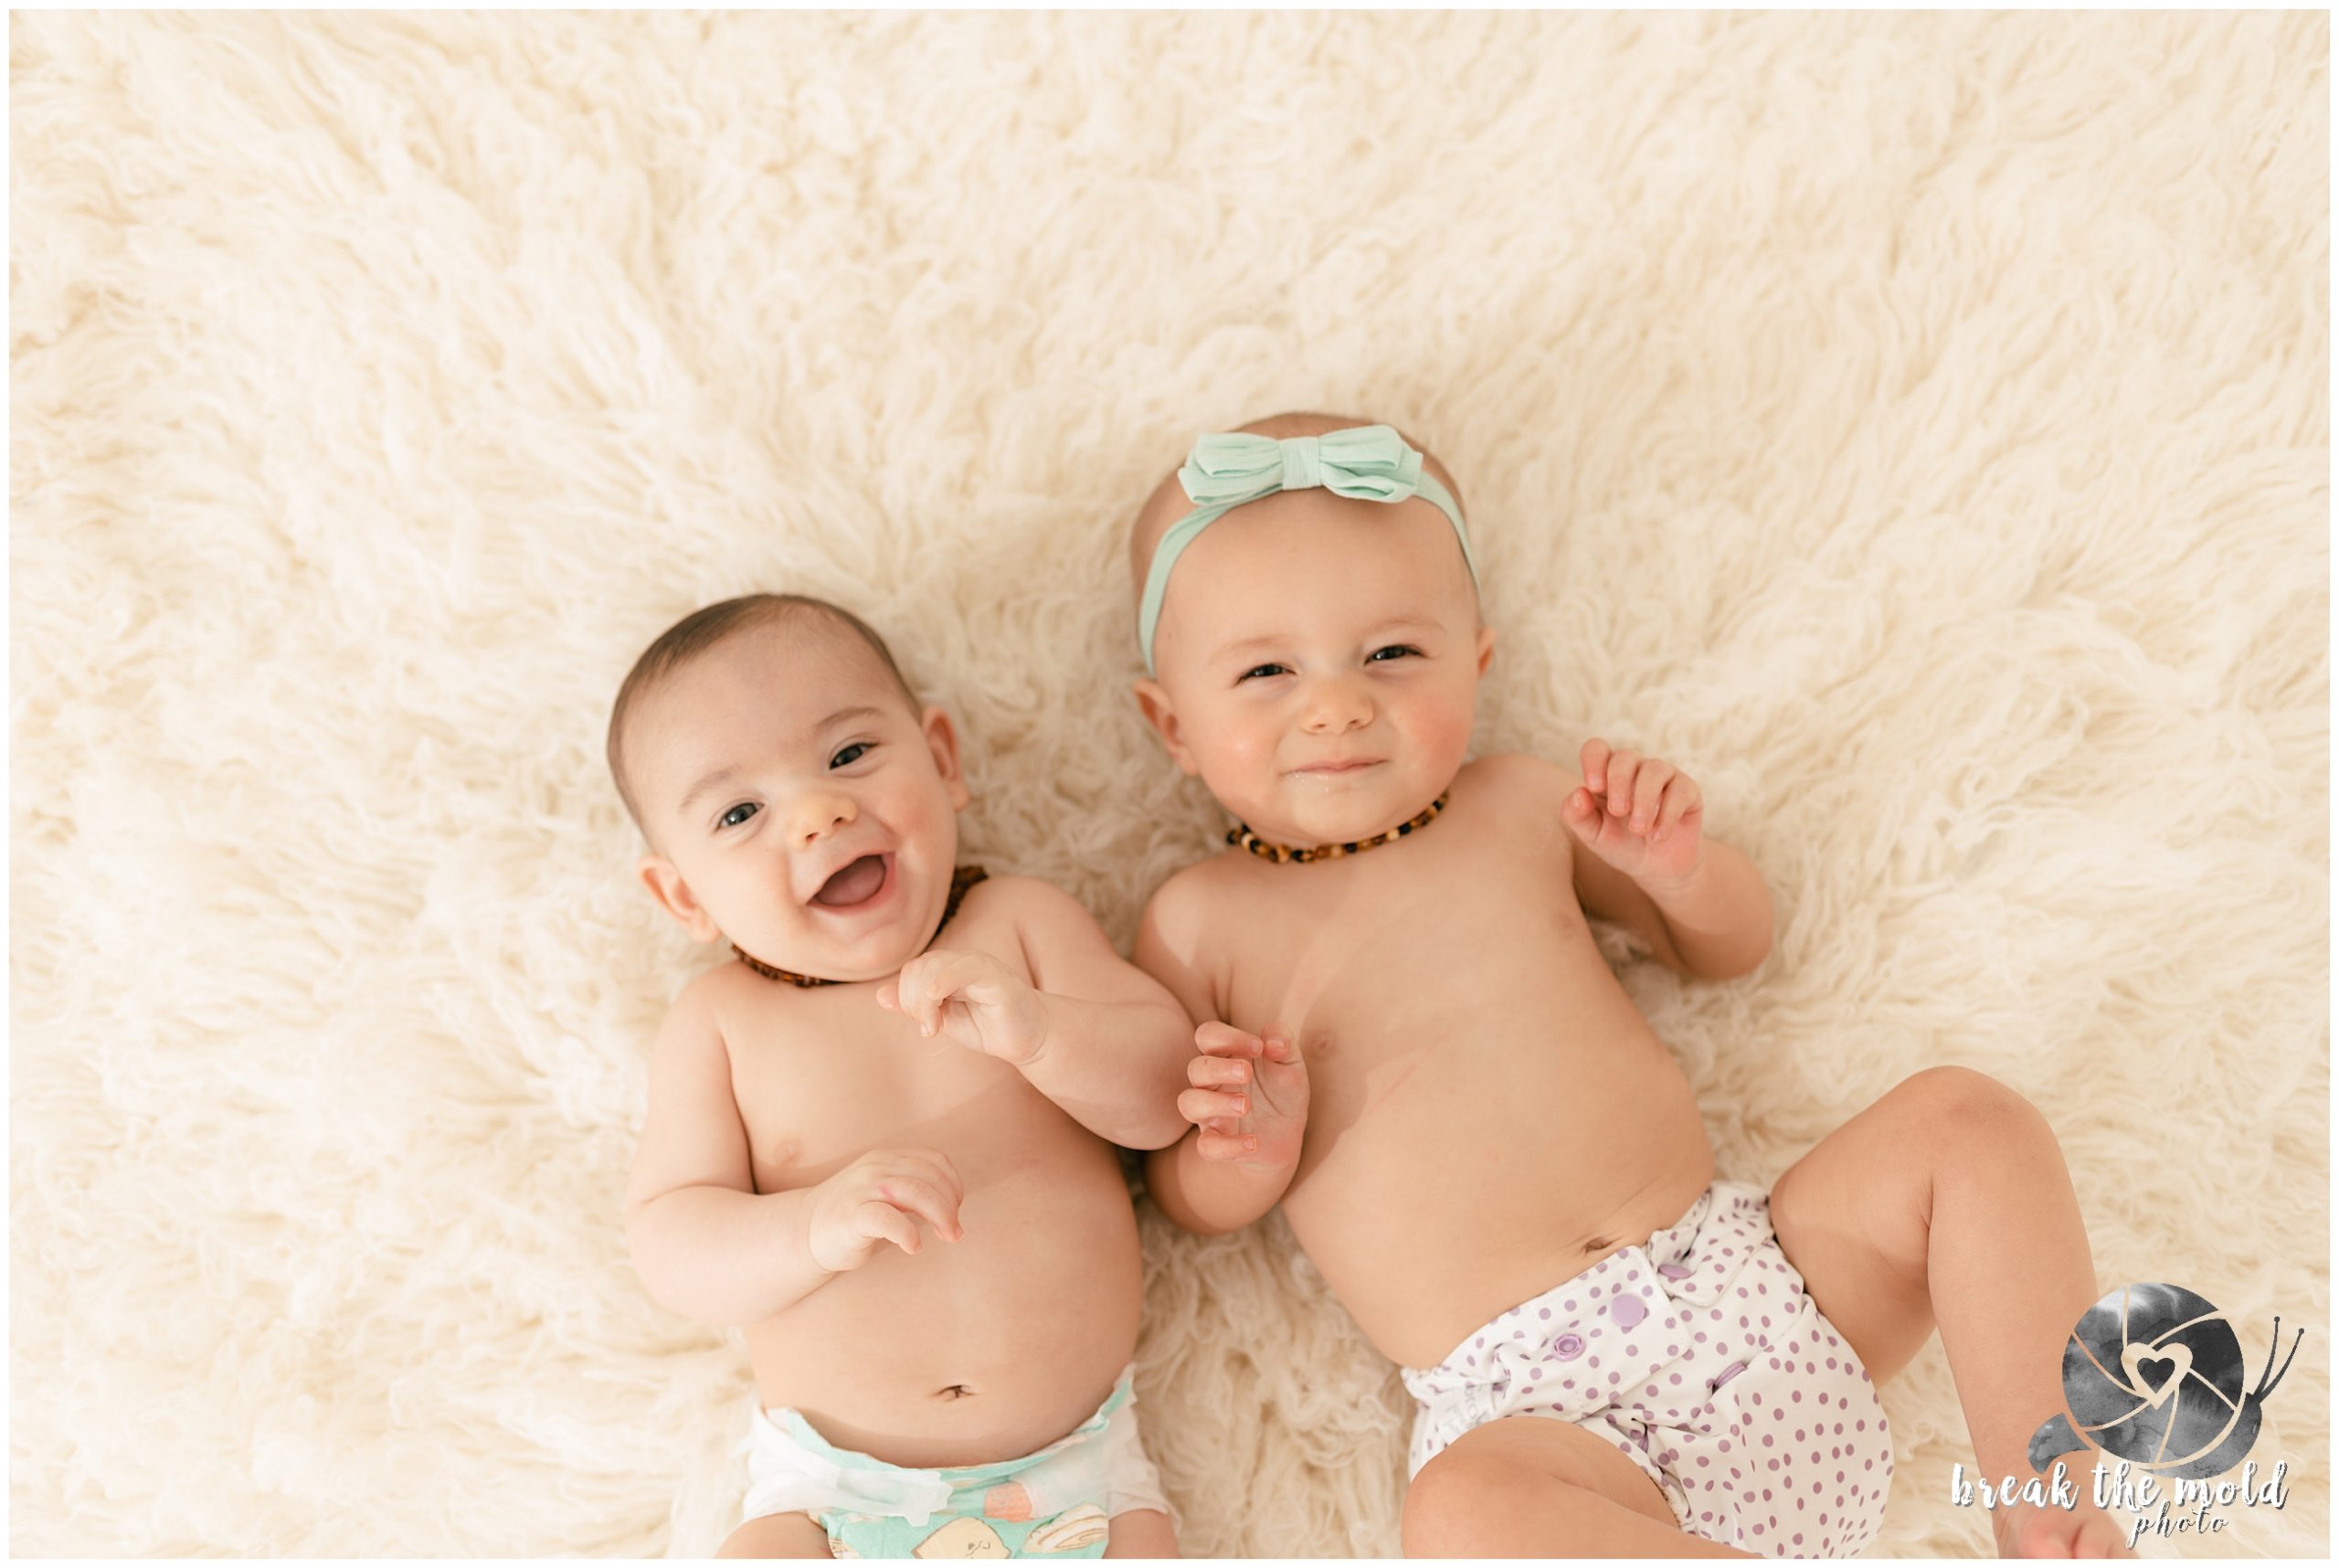 break-the-mold-photo-studio-knoxville-breastfeeding-photographer-mommy-baby-child-breastfed-portraits_0048.jpg